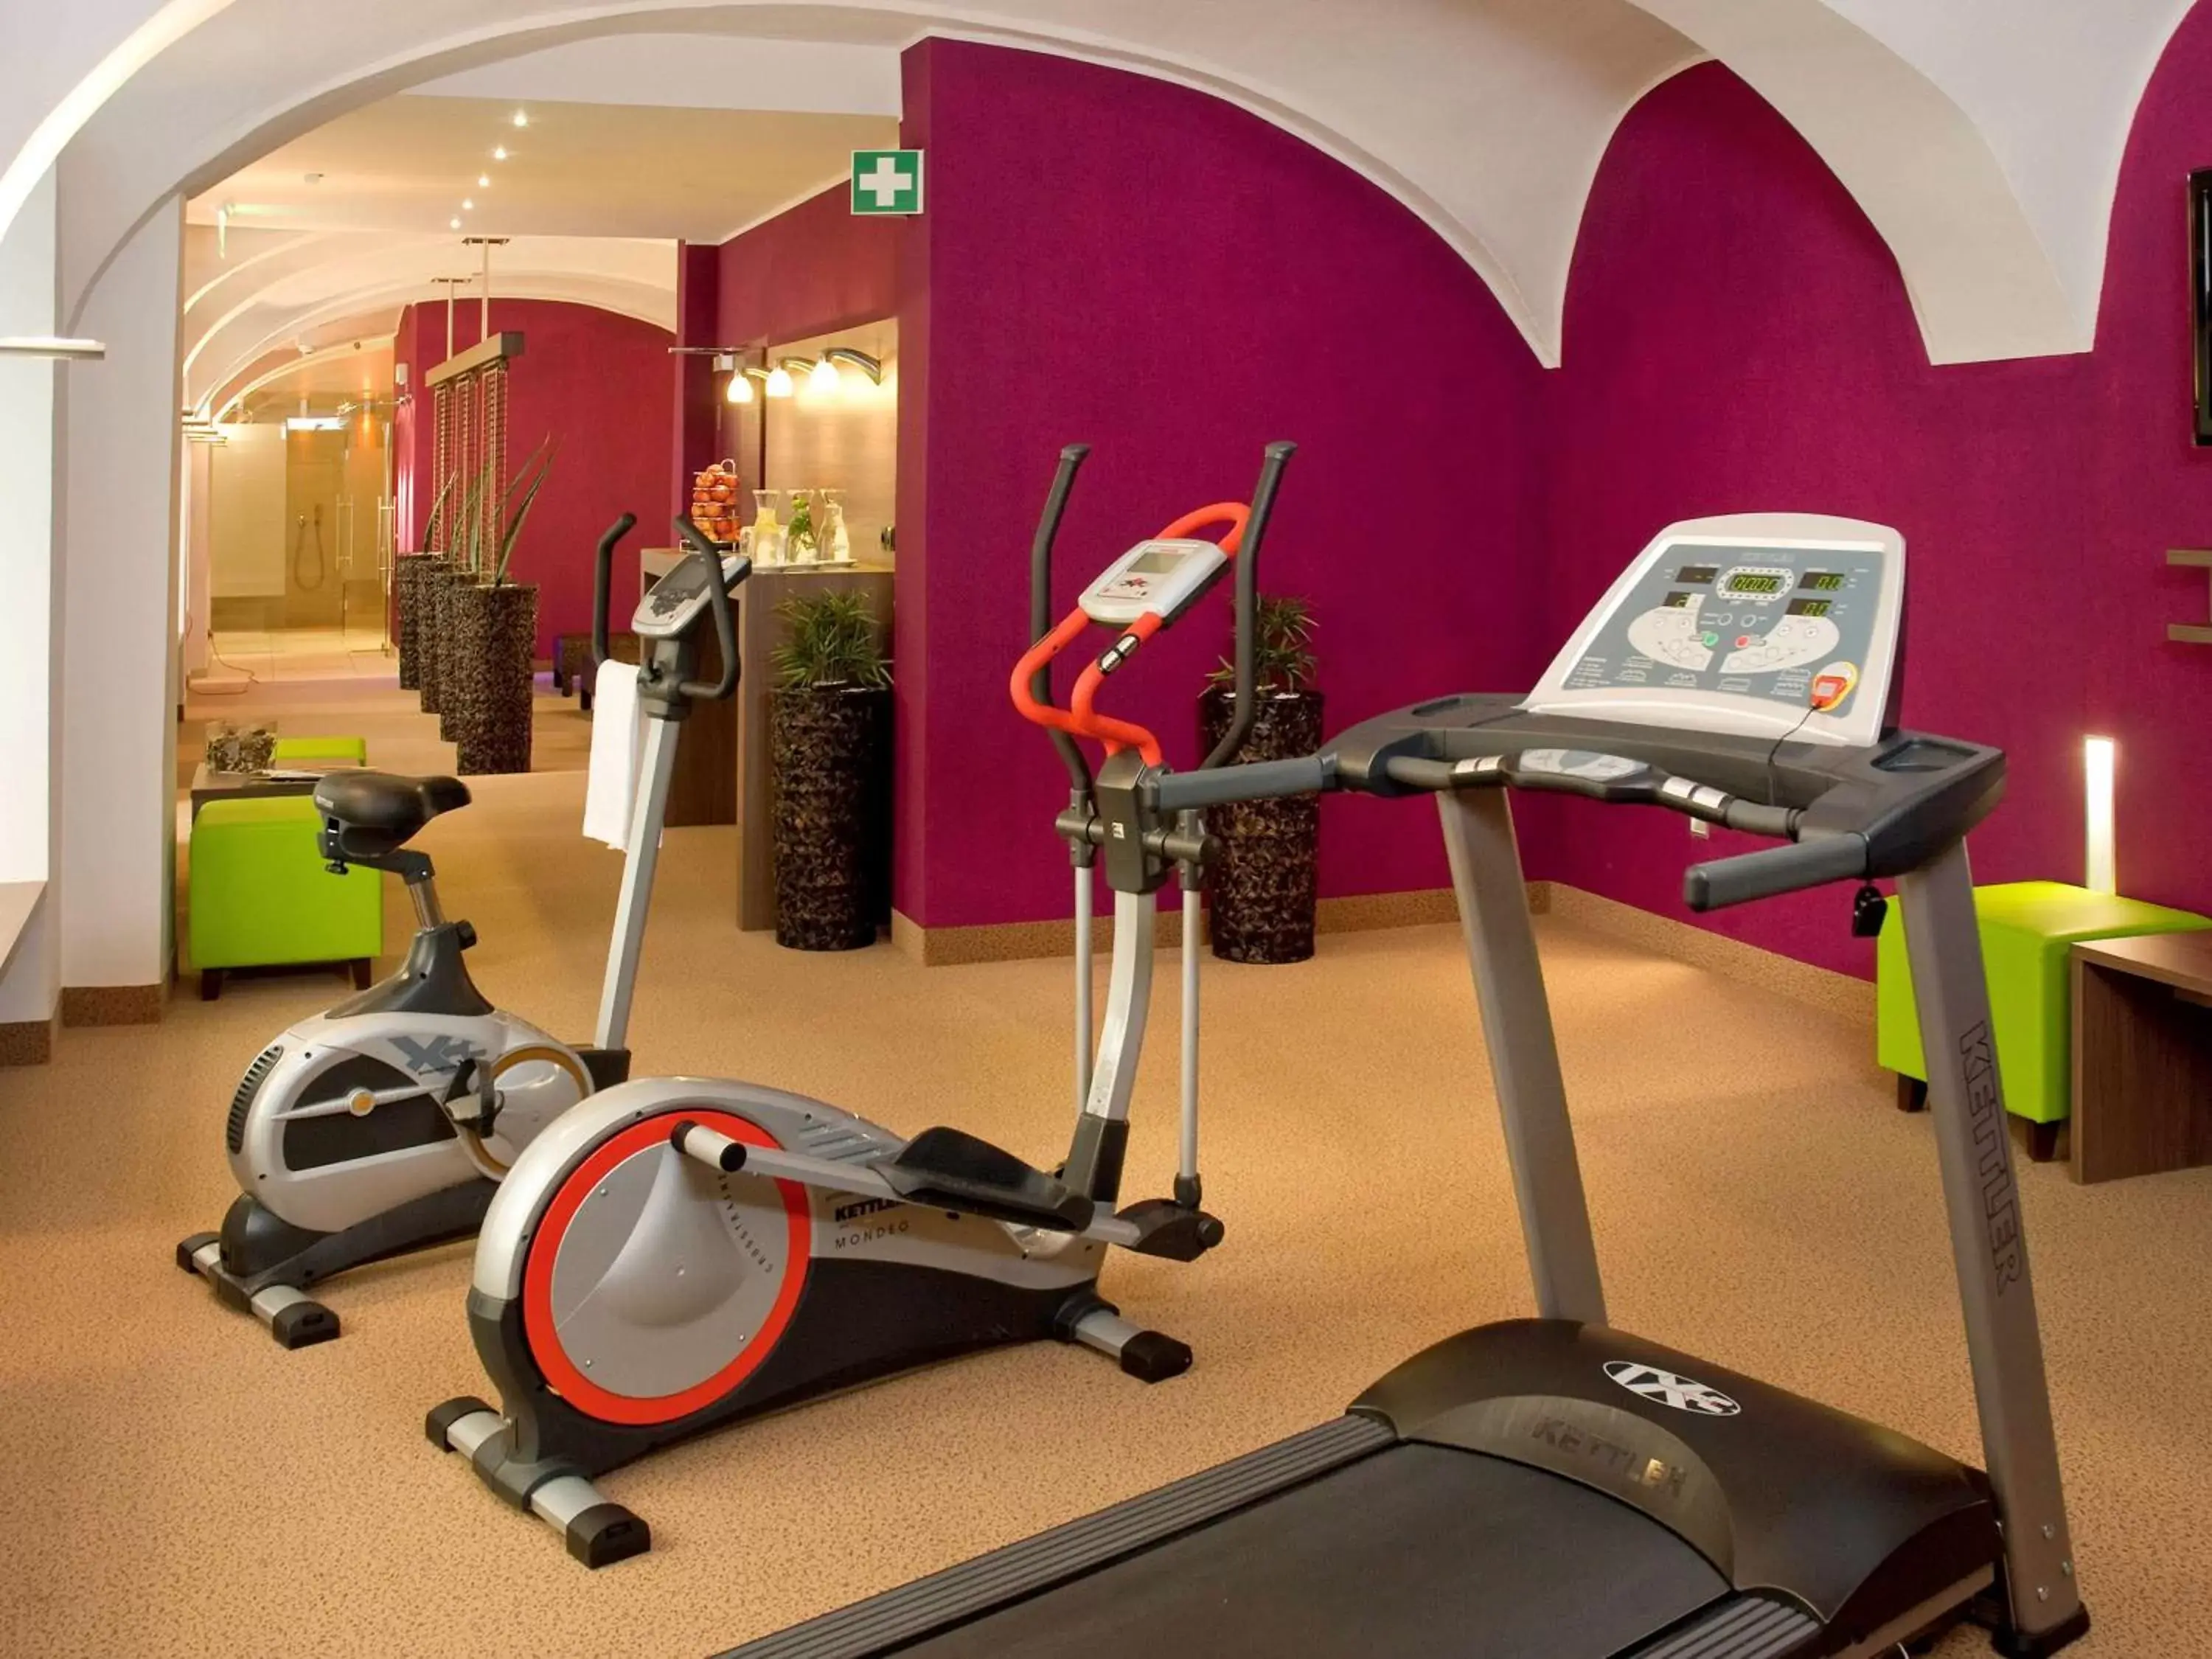 Fitness centre/facilities, Fitness Center/Facilities in Mercure Grand Hotel Biedermeier Wien